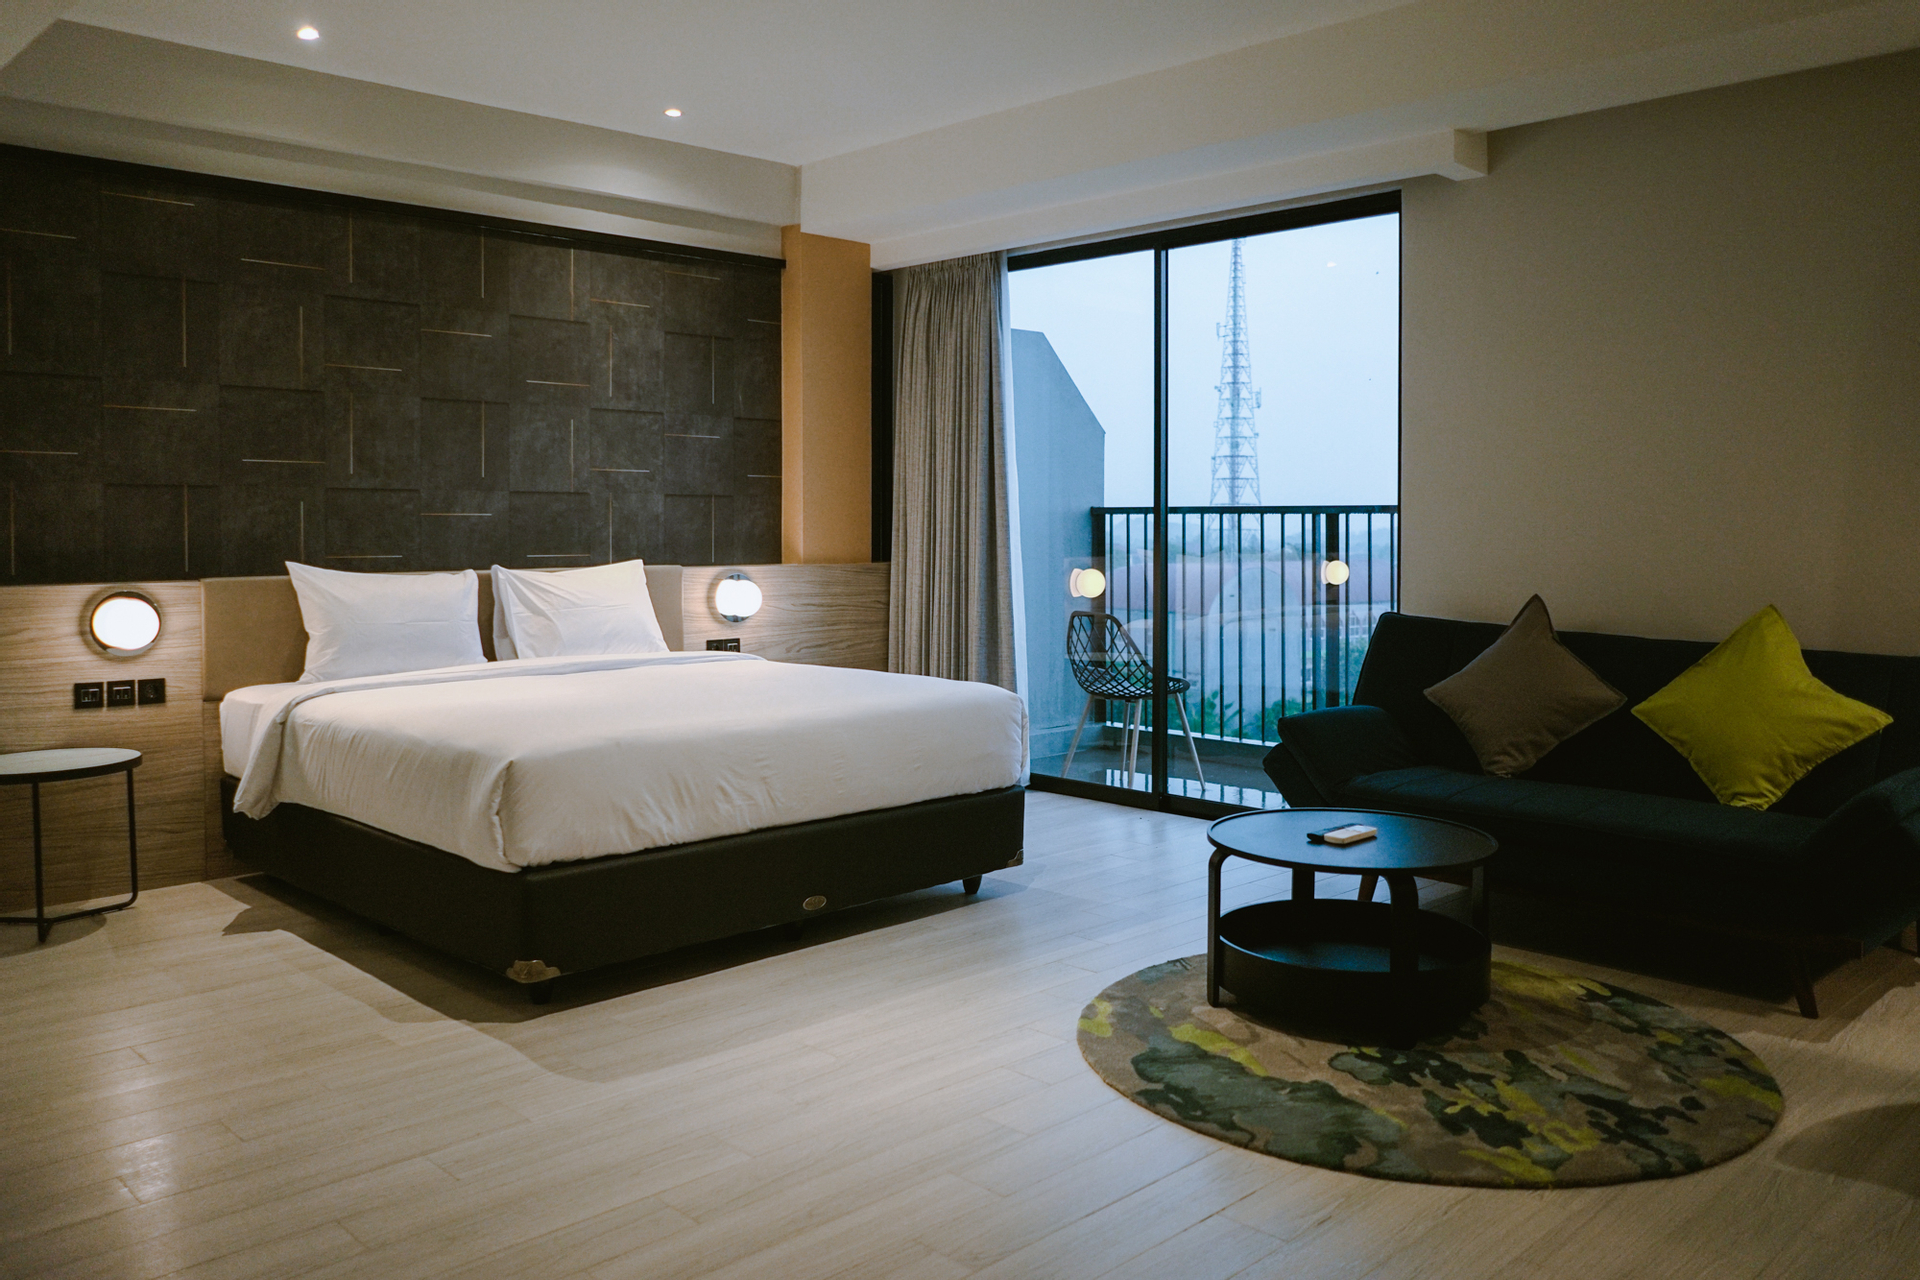 Bedroom 5, Achiera Hotel & Convention Jatiwangi, Majalengka